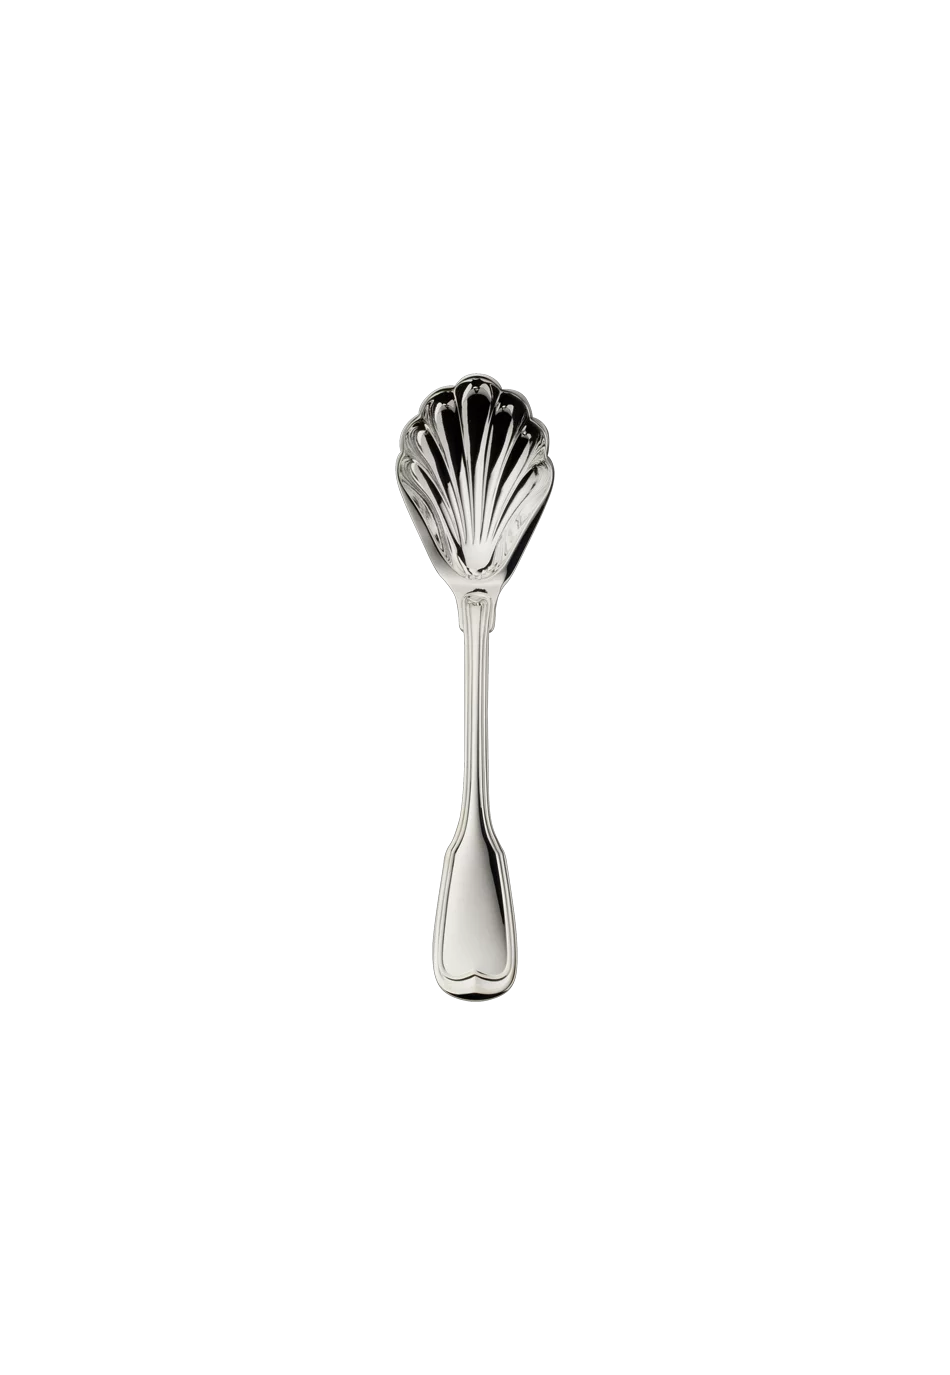 Alt-Faden Sugar Spoon (150g massive silverplated)